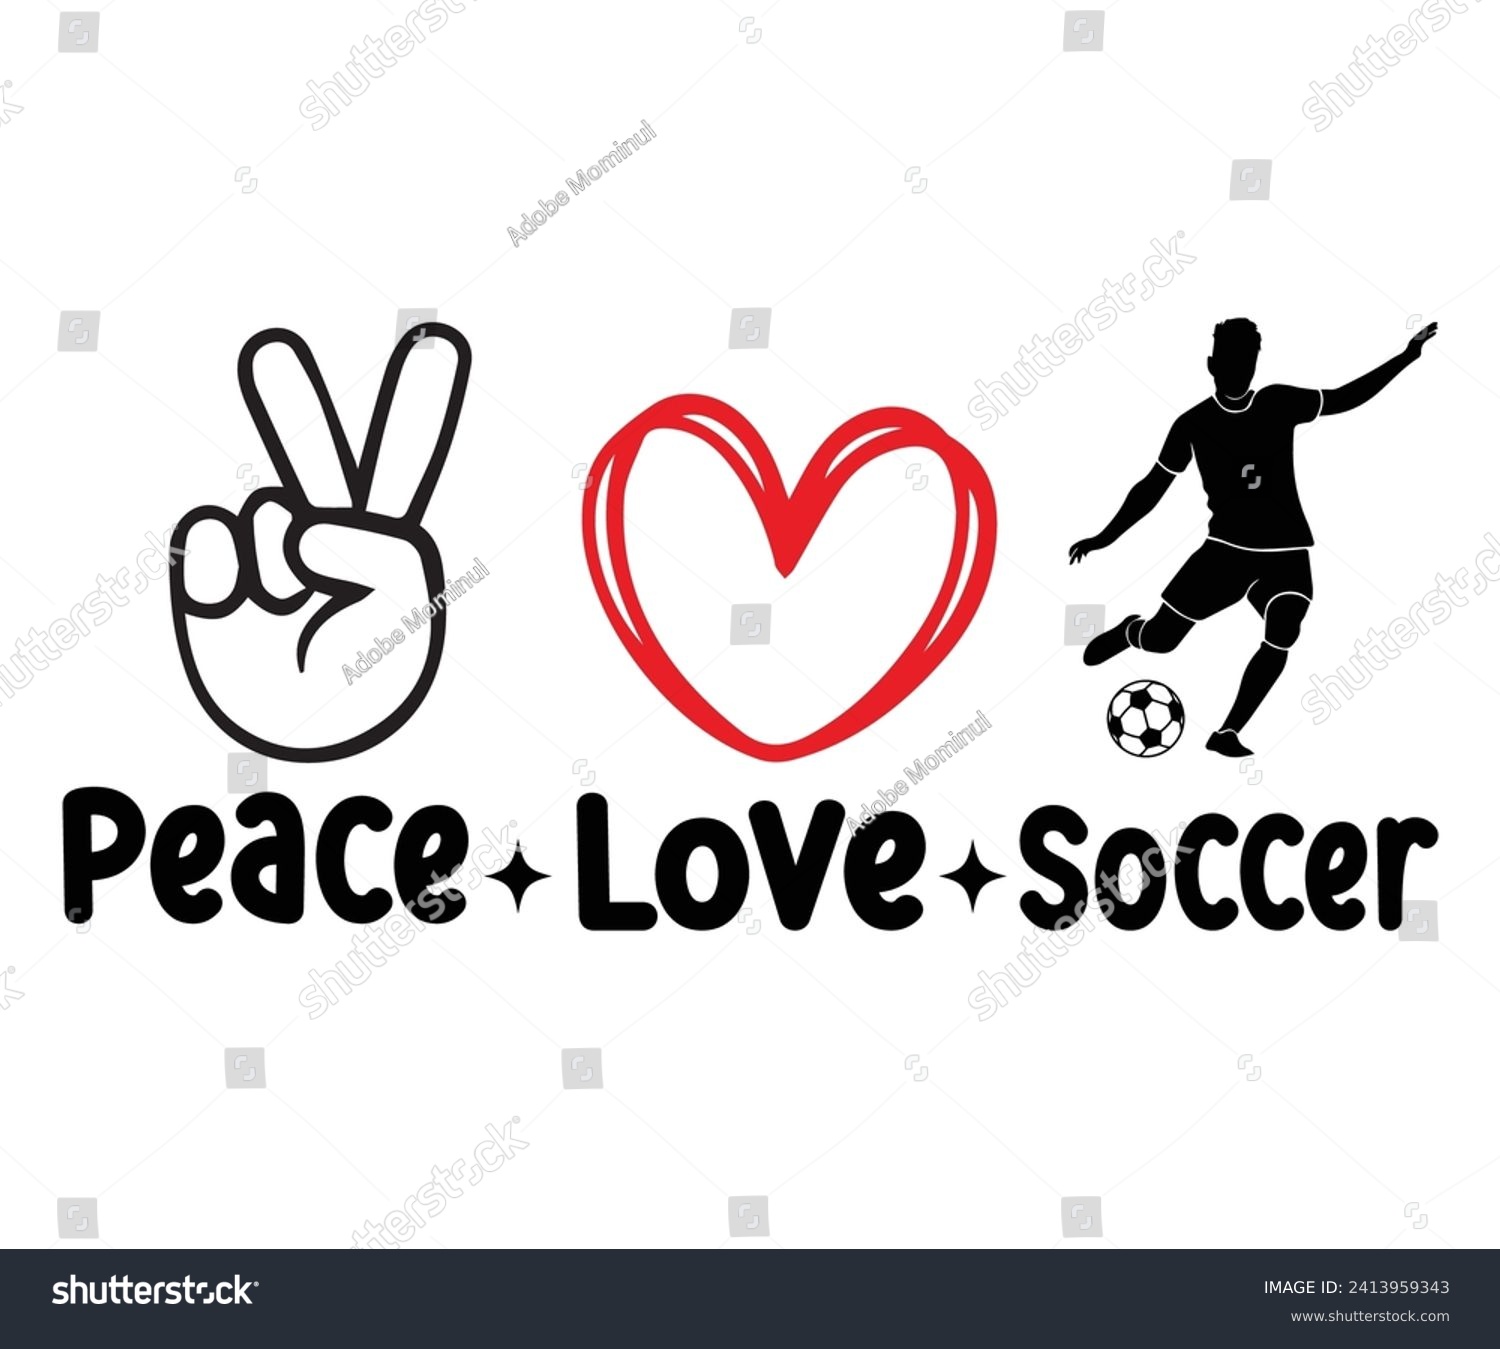 SVG of Peace Love Soccer Svg,Soccer Quote Svg,Retro,Soccer Mom Shirt,Funny Shirt,Soccar Player Shirt,Game Day Shirt,Gift For Soccer,Dad of Soccer,Soccer Mascot,Soccer Football,Sports Design svg